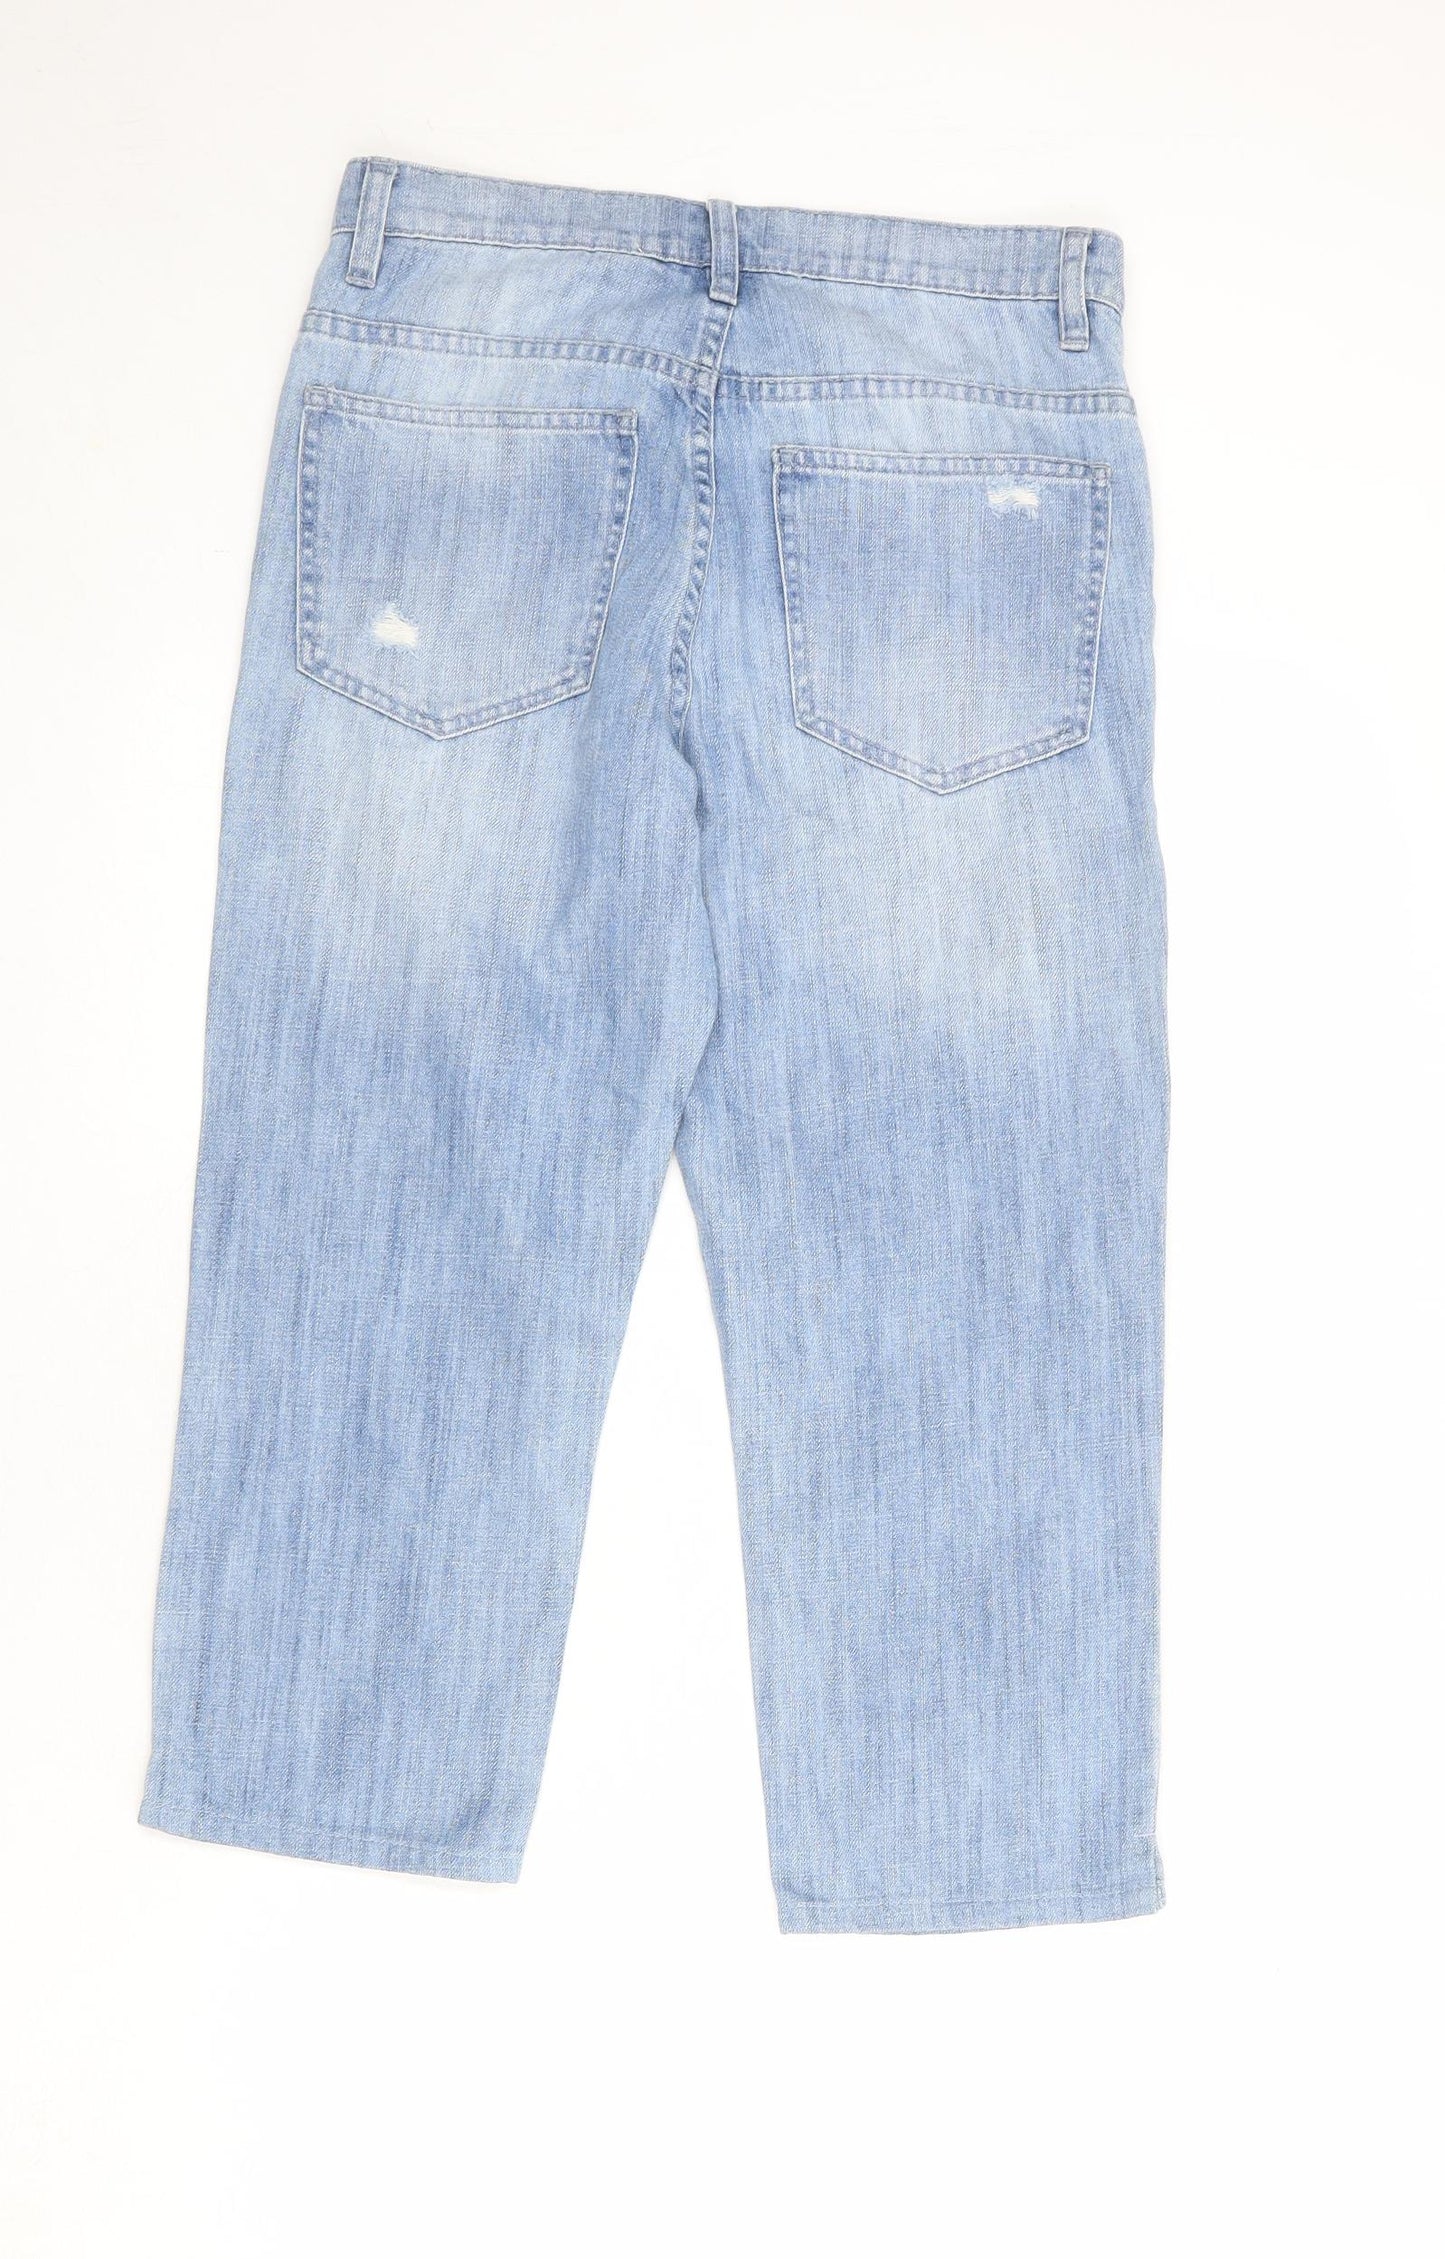 Amazing Woman Womens Blue Cotton Straight Jeans Size 10 Regular Zip